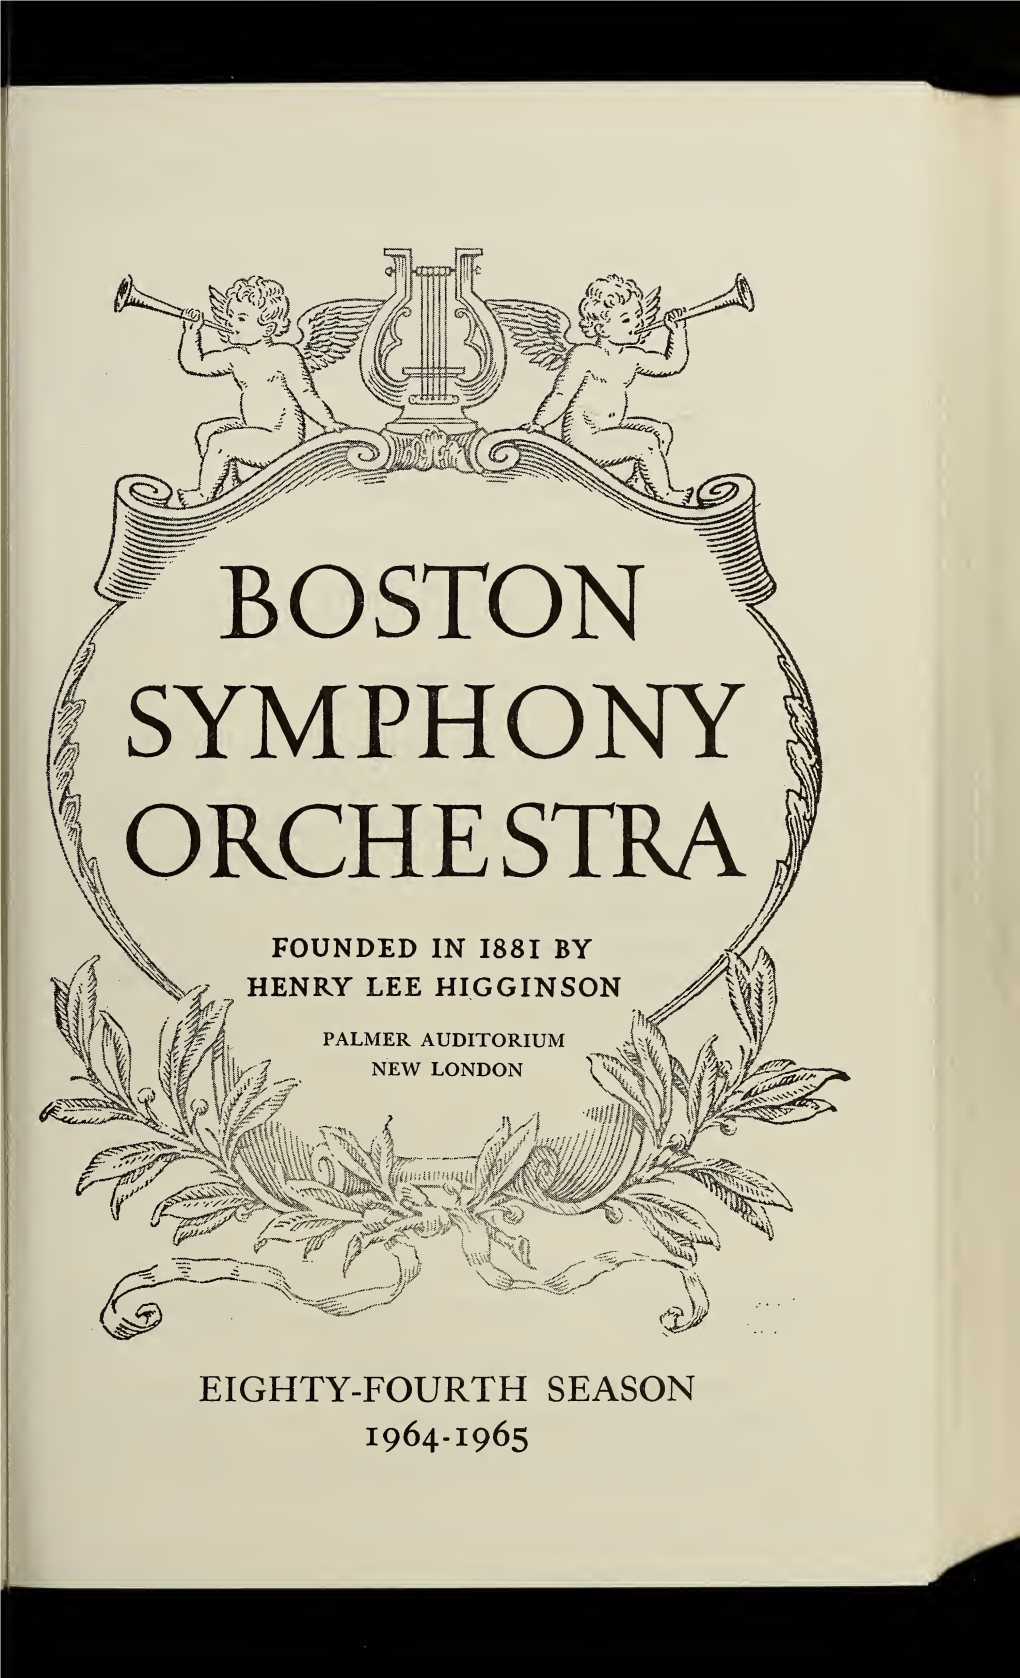 Boston Symphony Orchestra Concert Programs, Season 84, 1964-1965